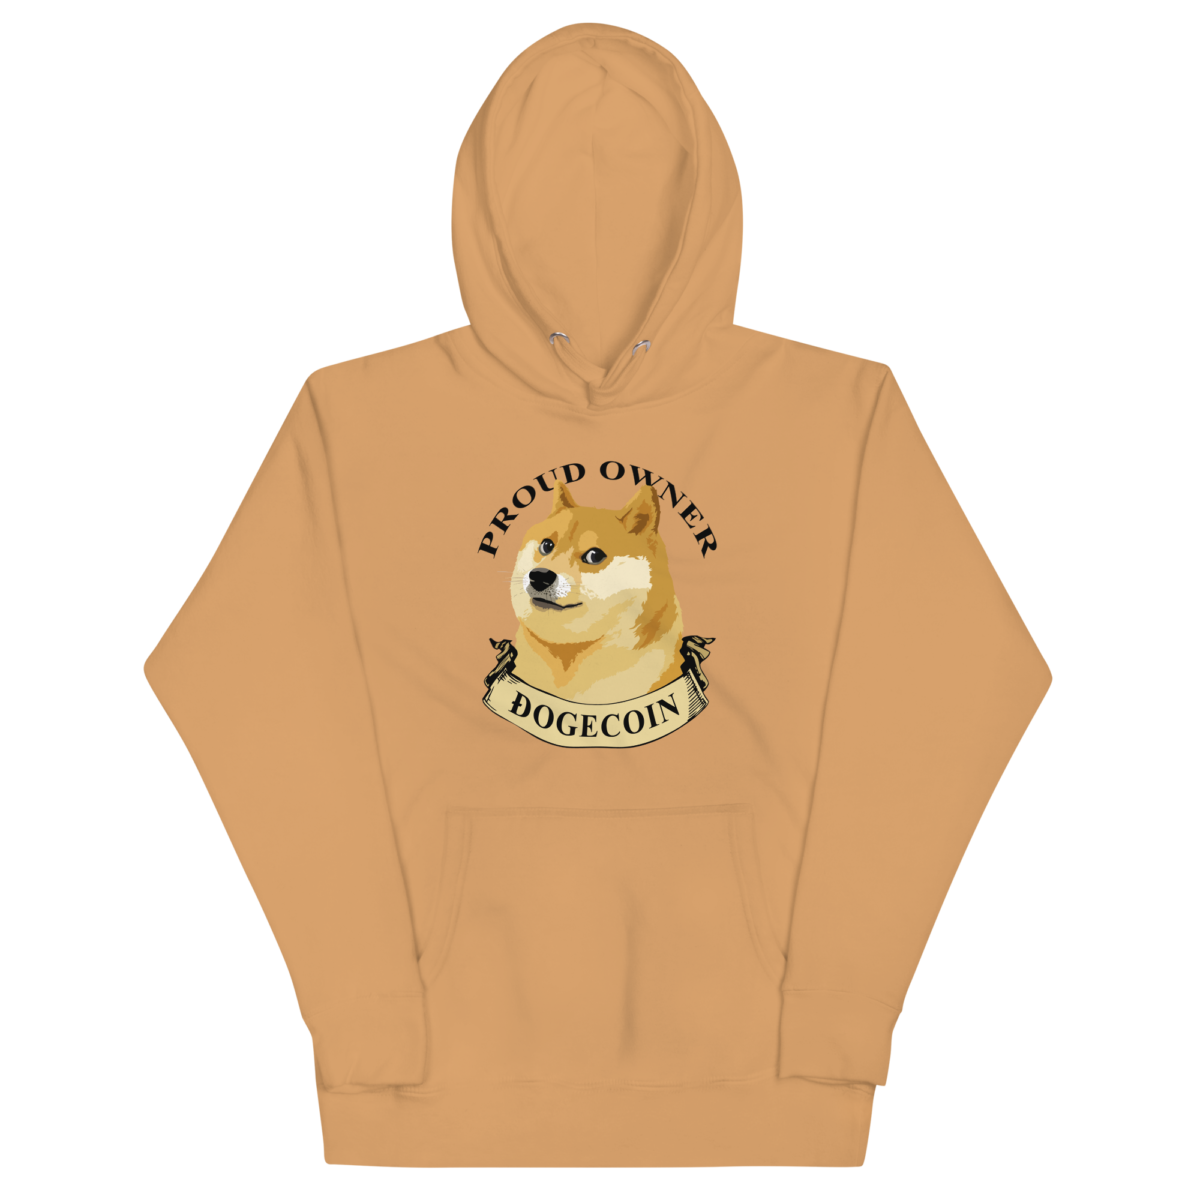 unisex premium hoodie khaki front 6357ab5beefb6 - Proud Owner of Dogecoin Hoodie